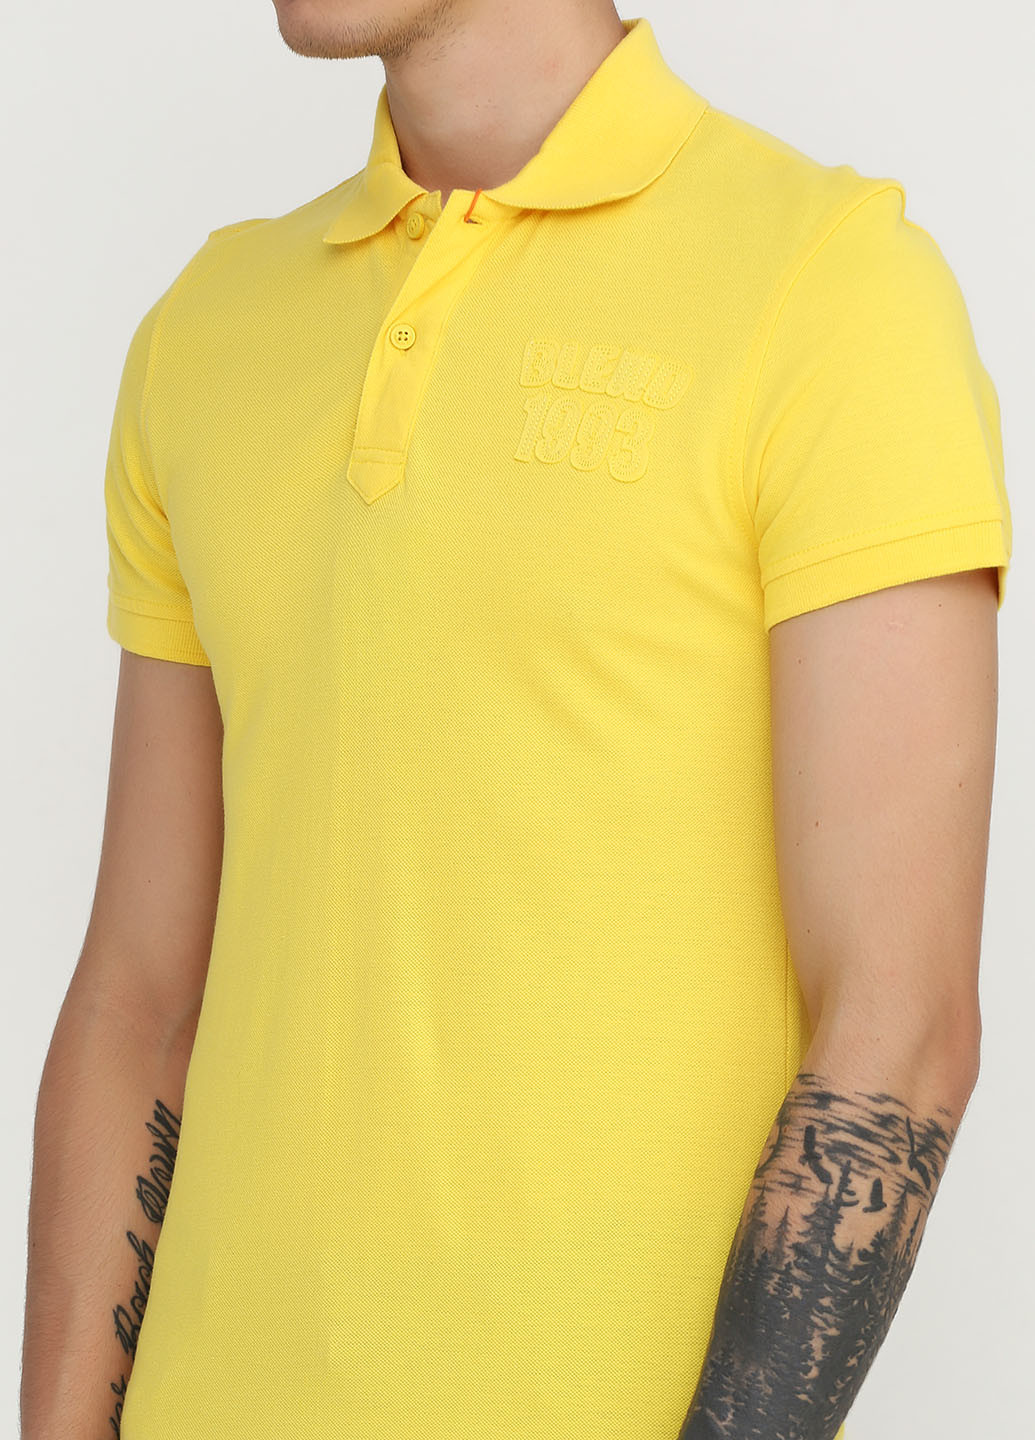 Желтая футболка-поло для мужчин Blend однотонная